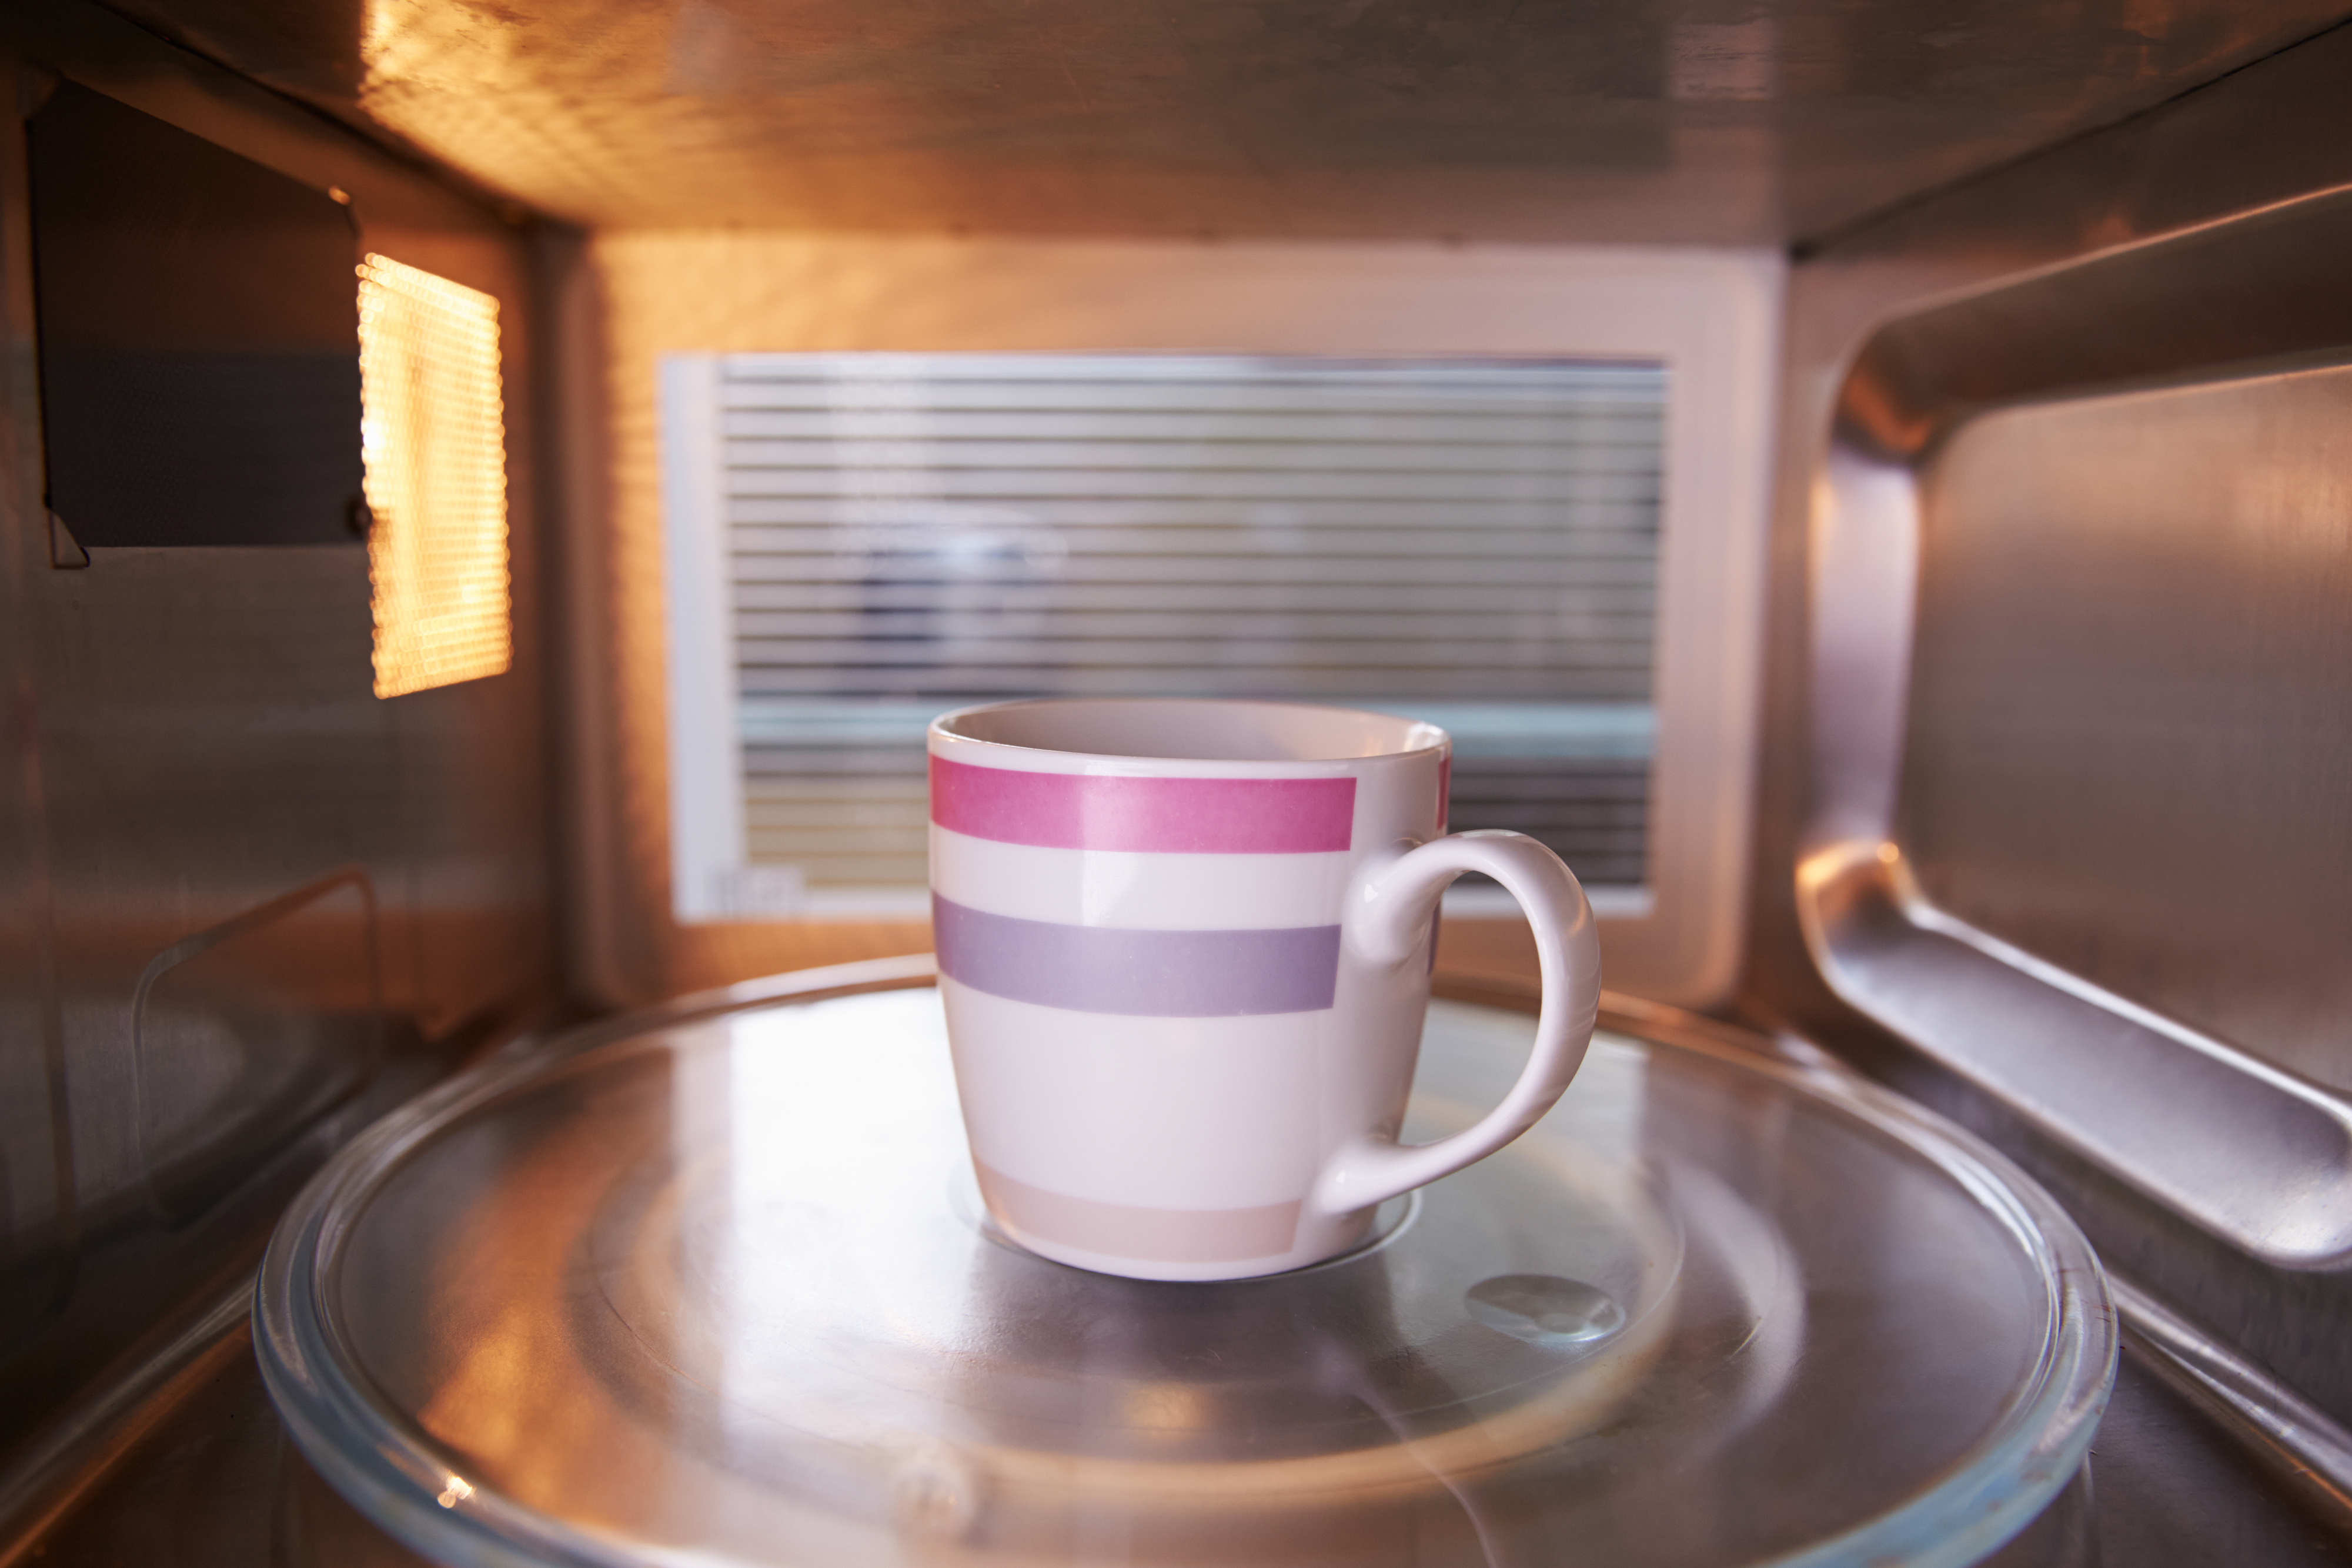 A mug in a microwave